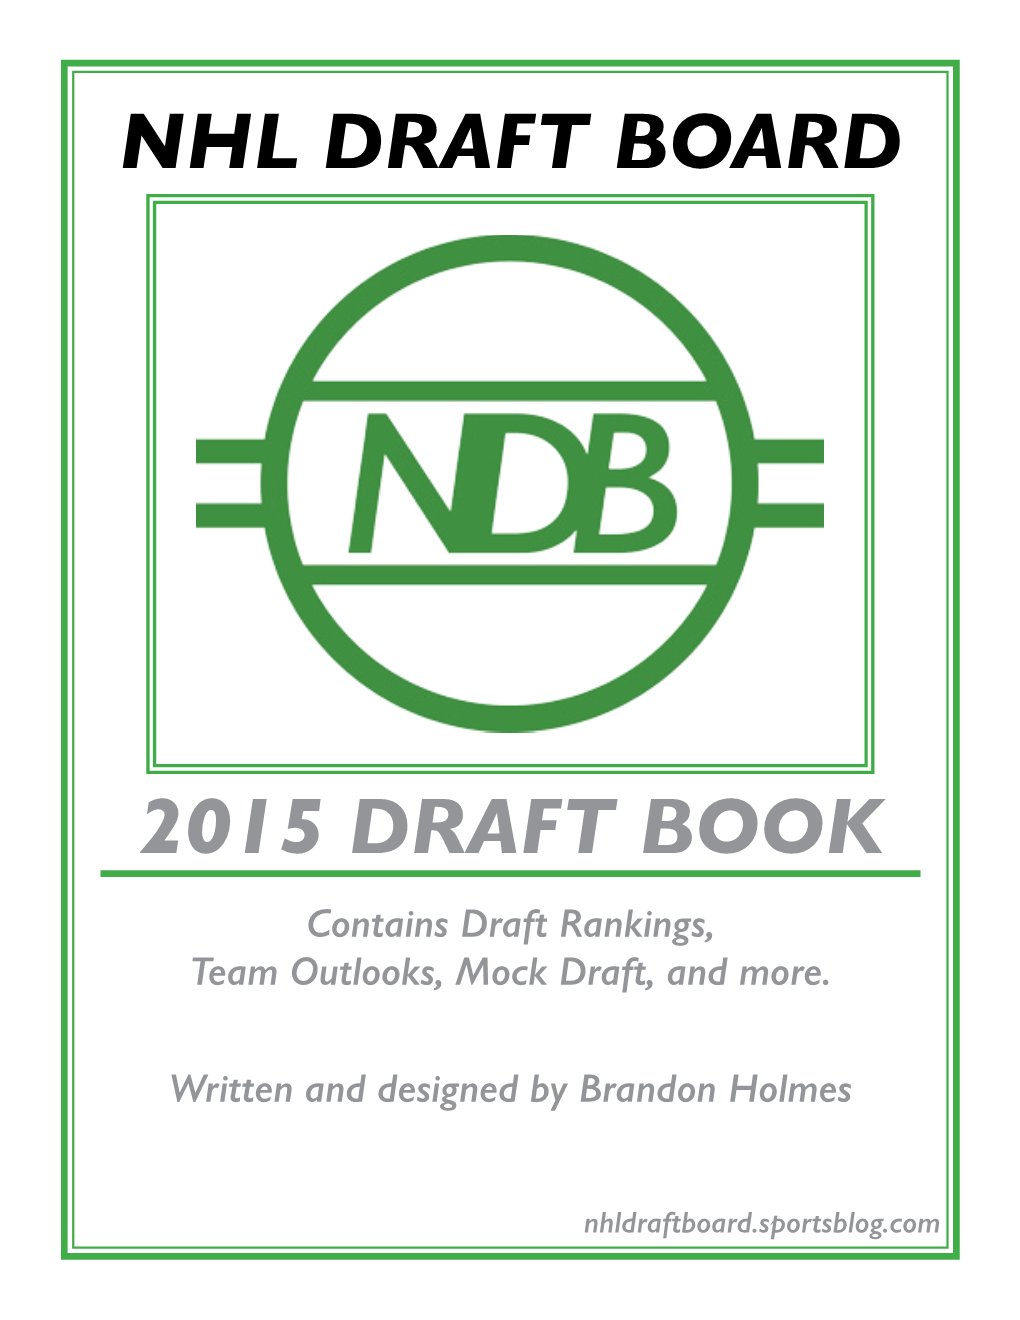 Nhl Draft Board 2015 Draft Book